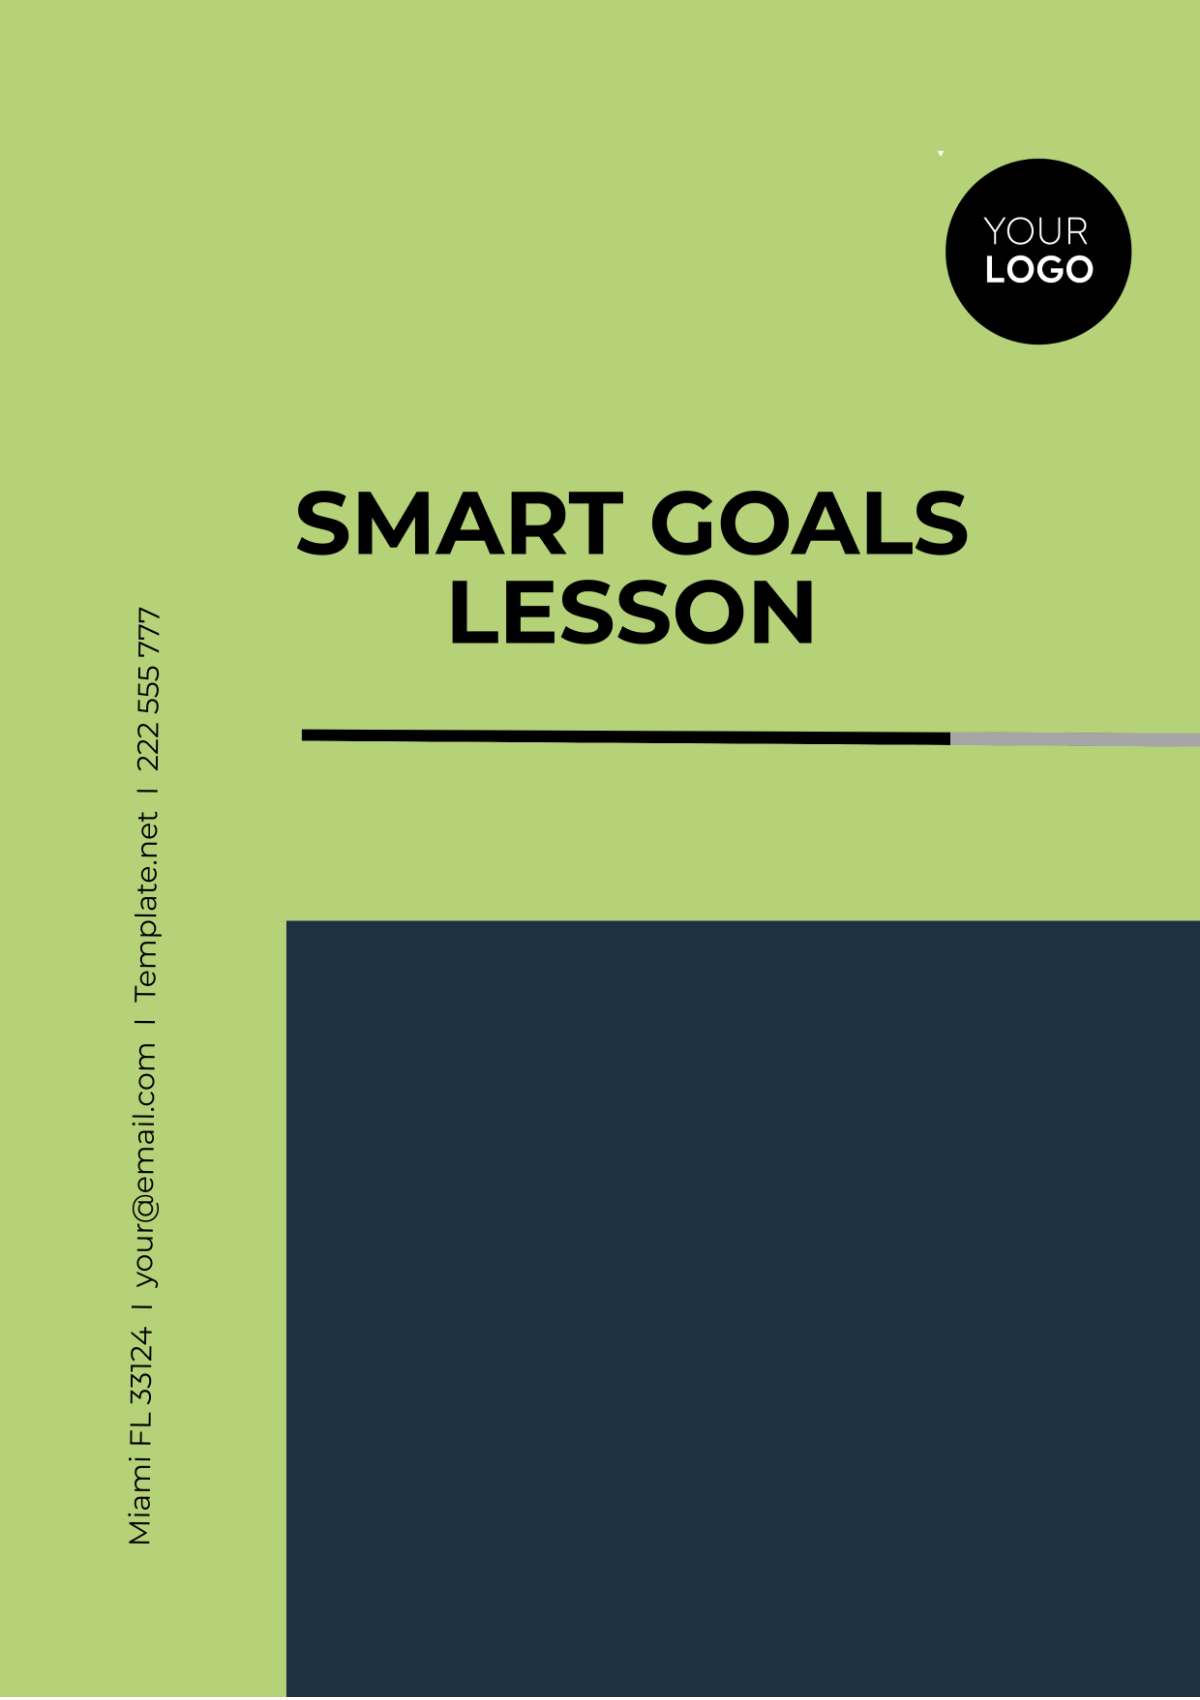 SMART Goals Lesson Template